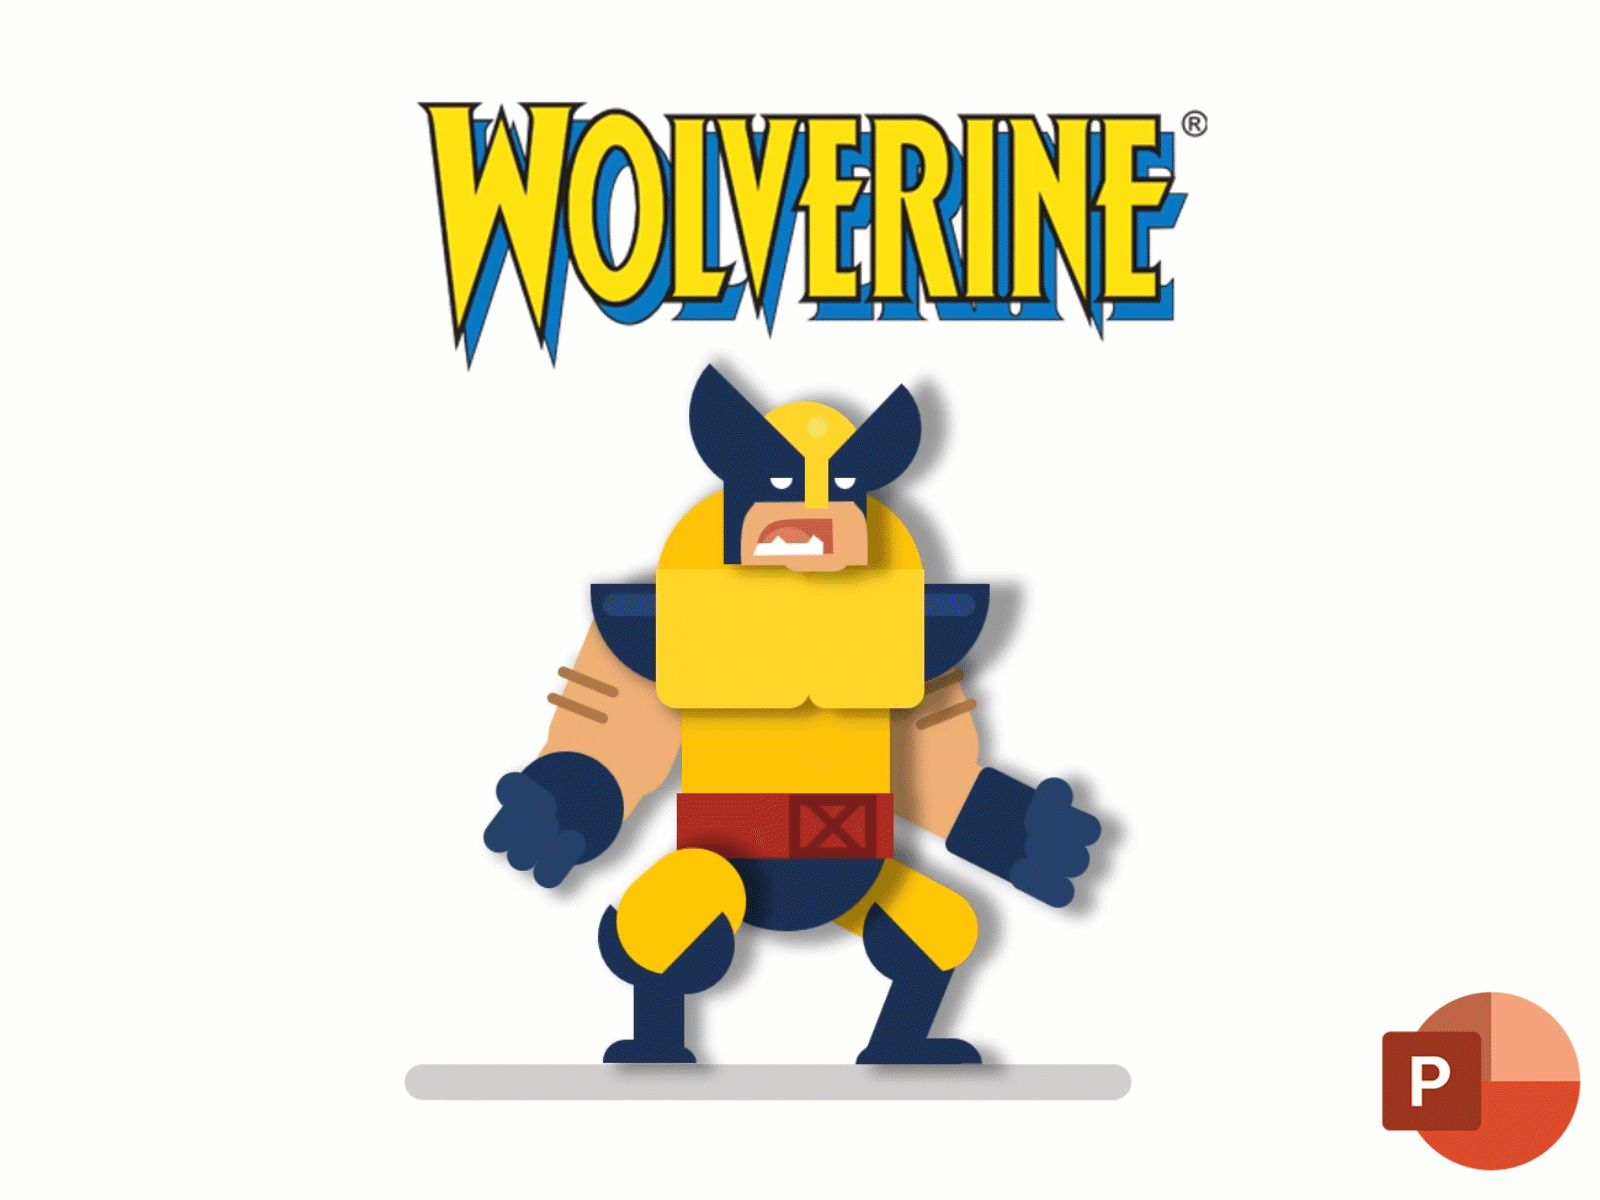 Wolverine Animation in PowerPoint